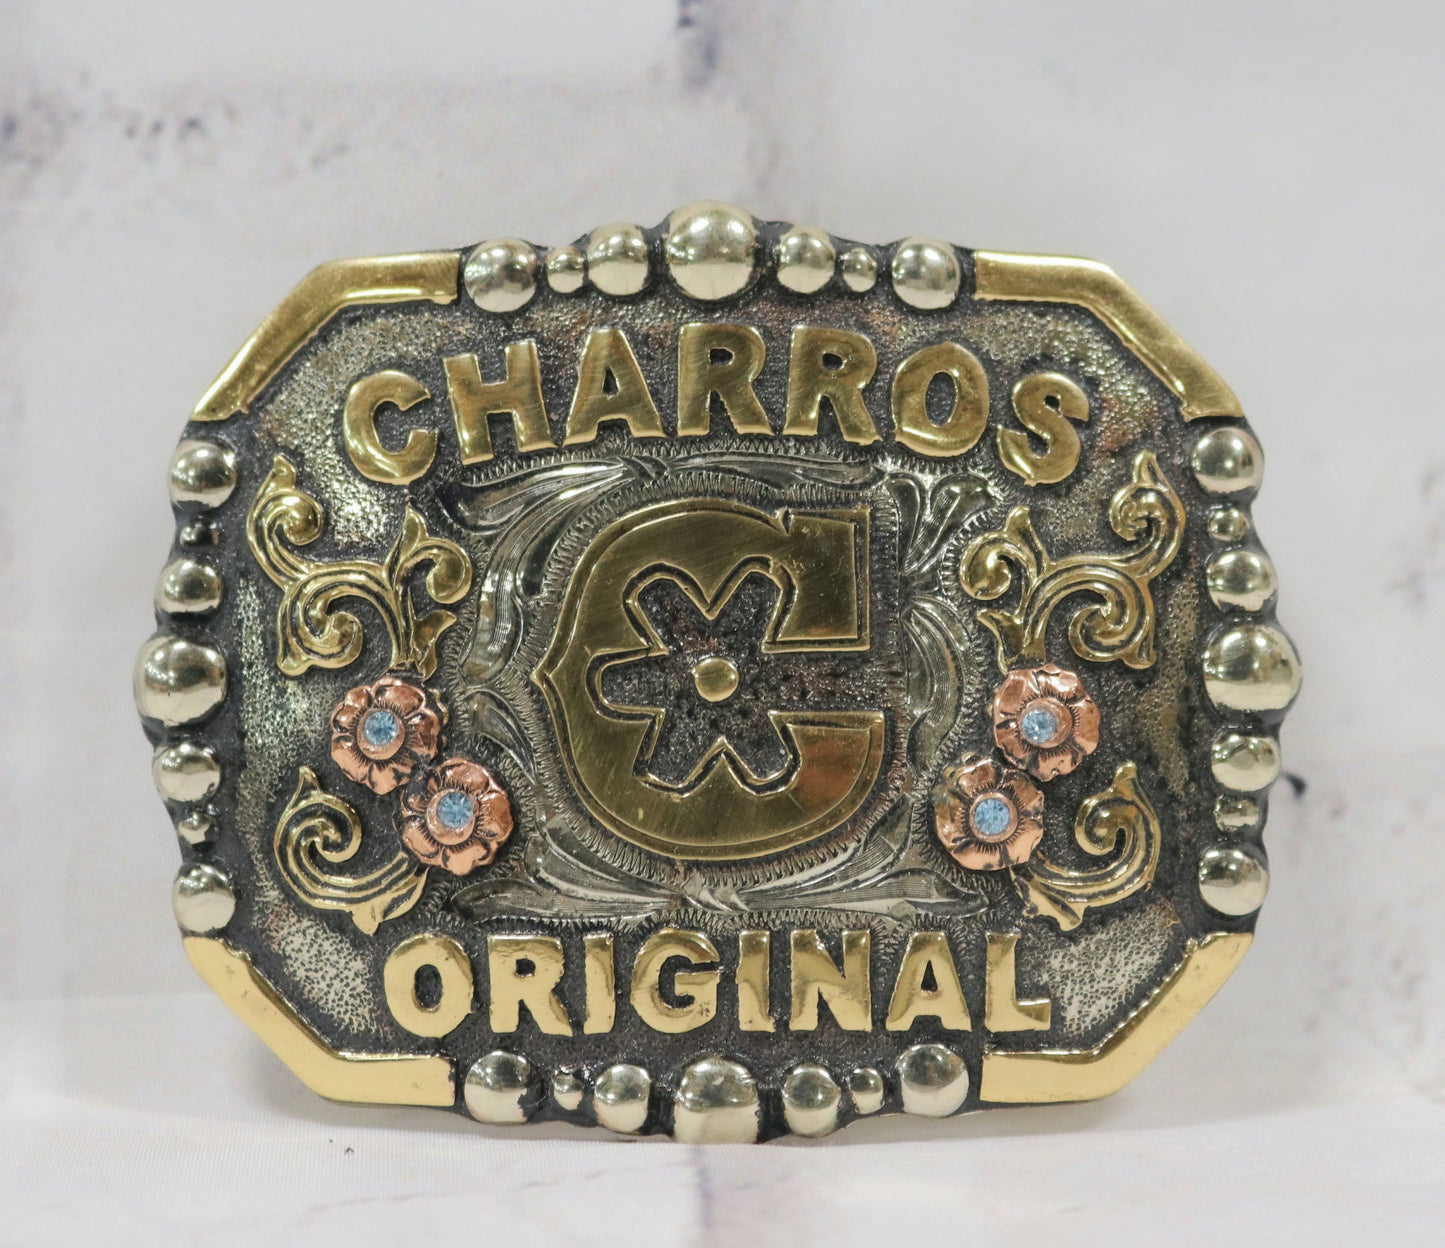 Custom Buckle “C" Charros Original